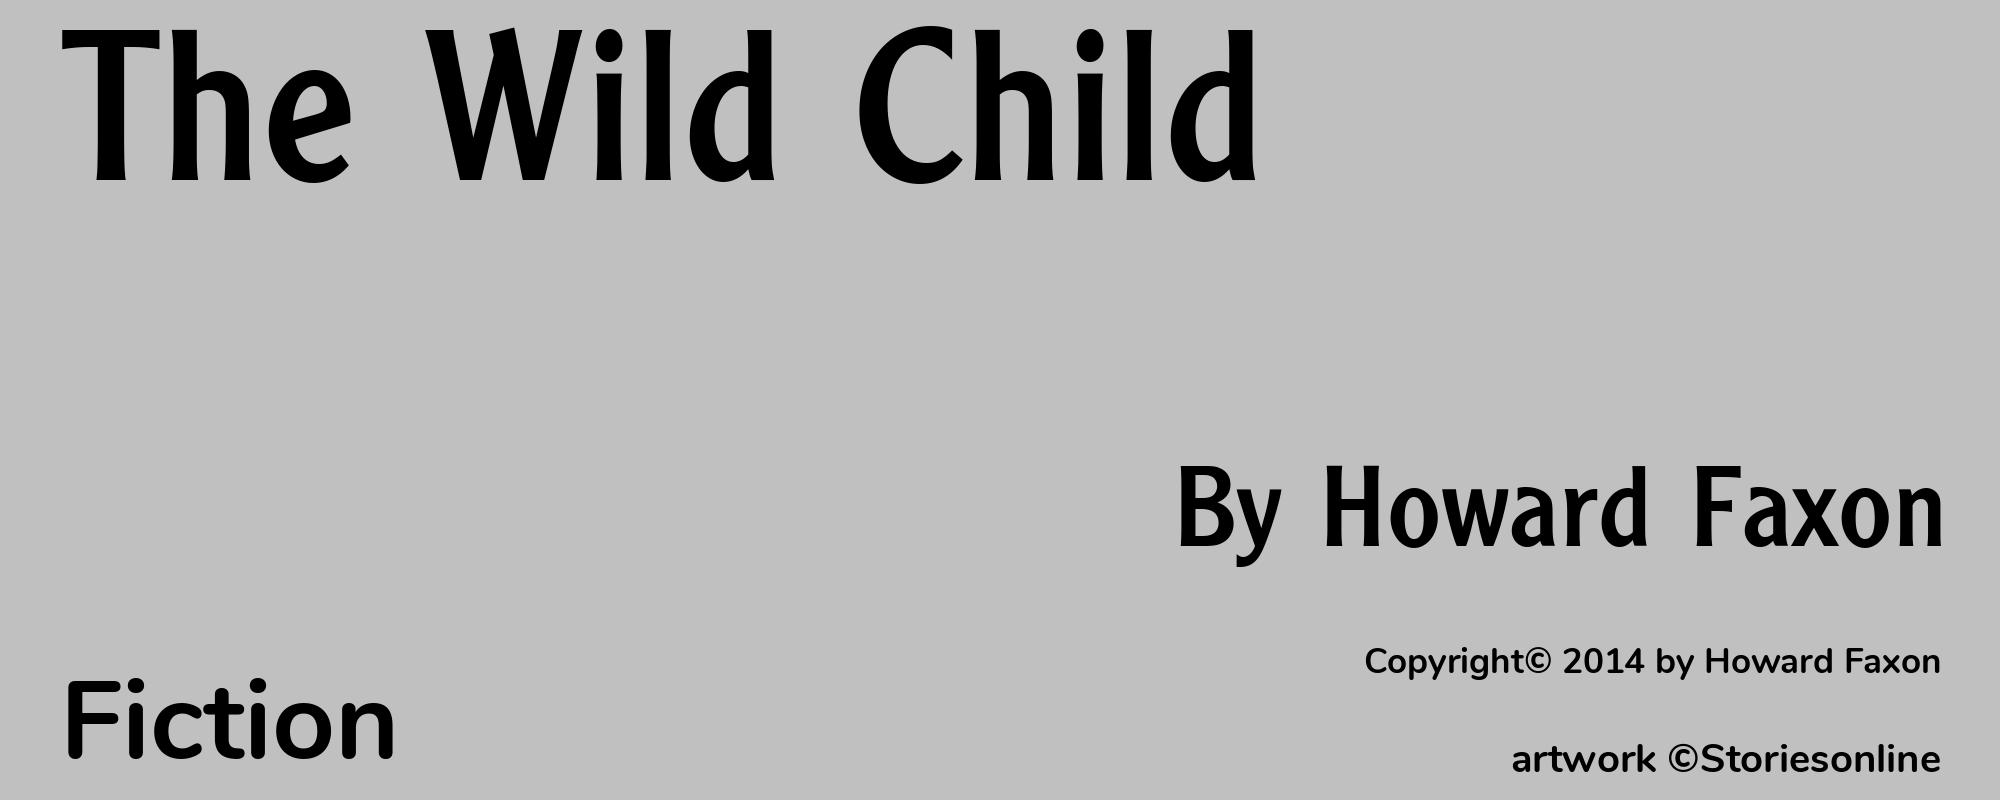 The Wild Child - Cover